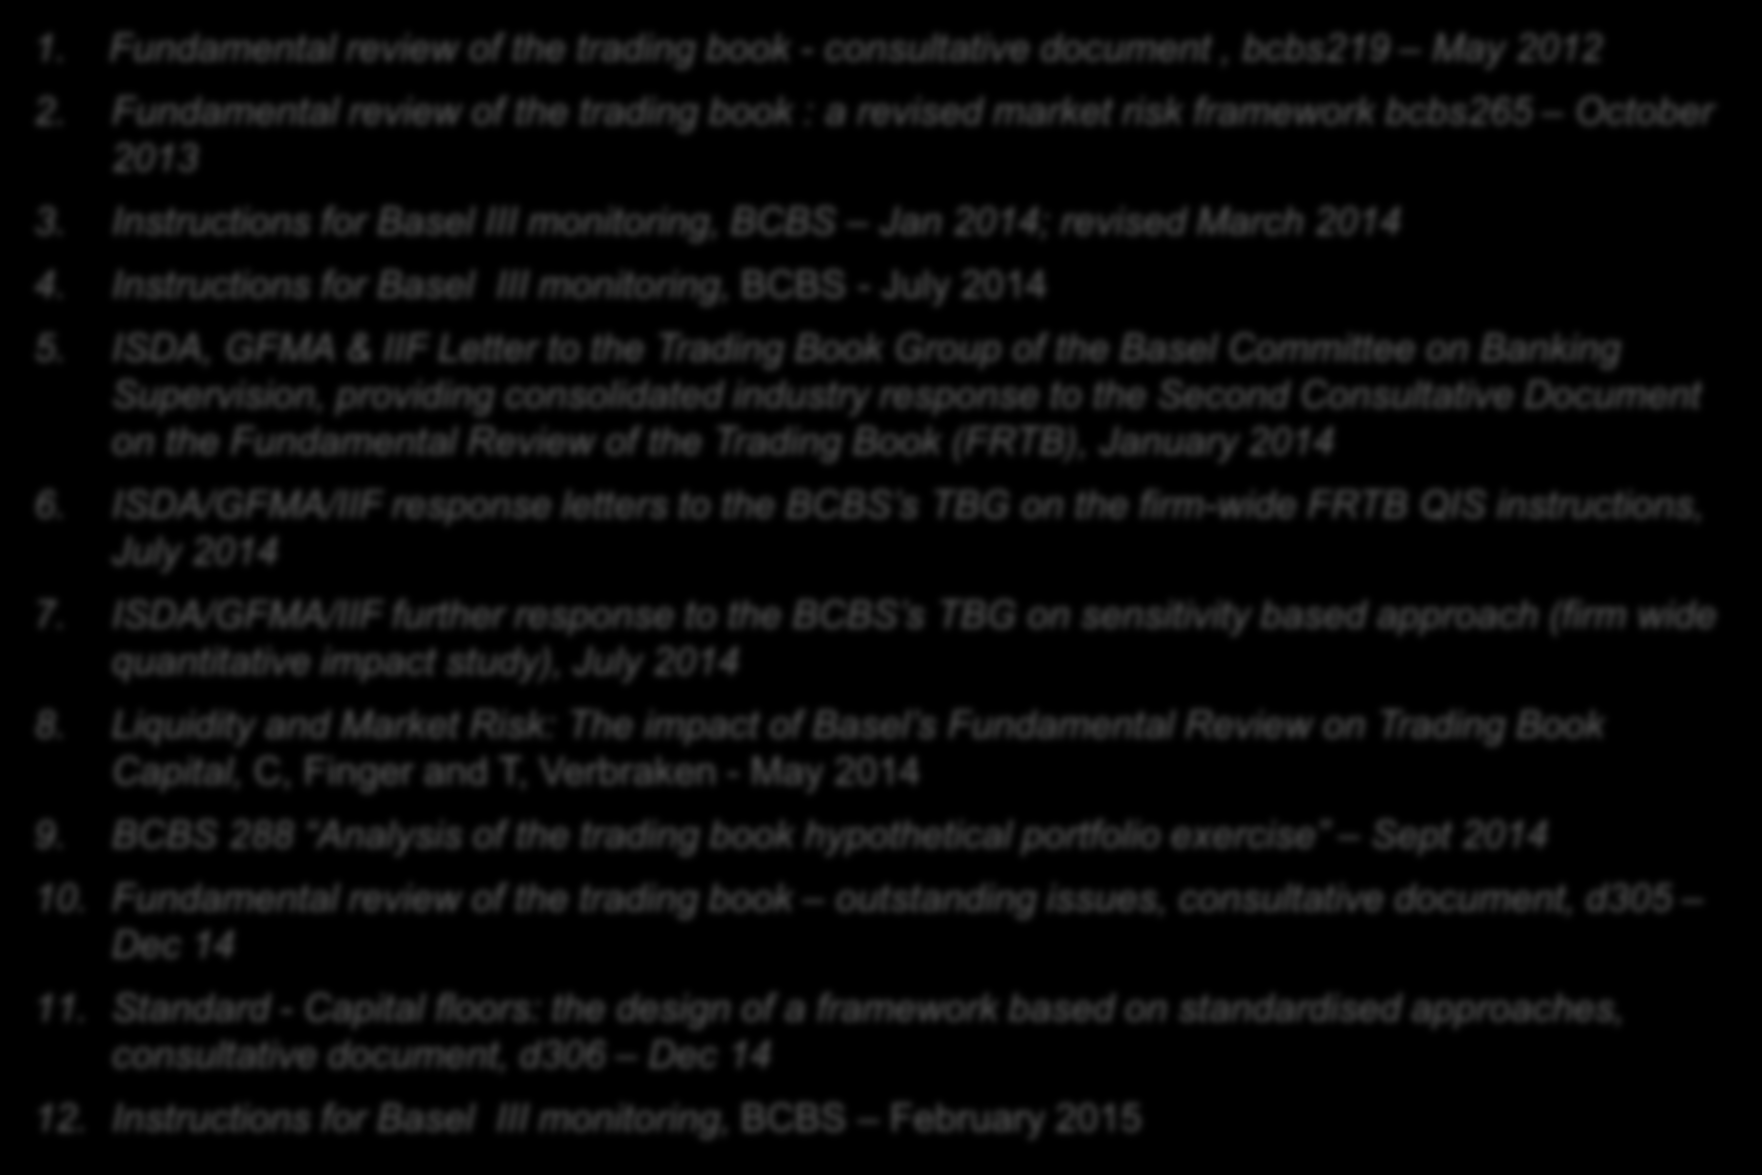 Bibliografia 1. Fundamental review of the trading book - consultative document, bcbs219 May 2012 2. Fundamental review of the trading book : a revised market risk framework bcbs265 October 2013 3.